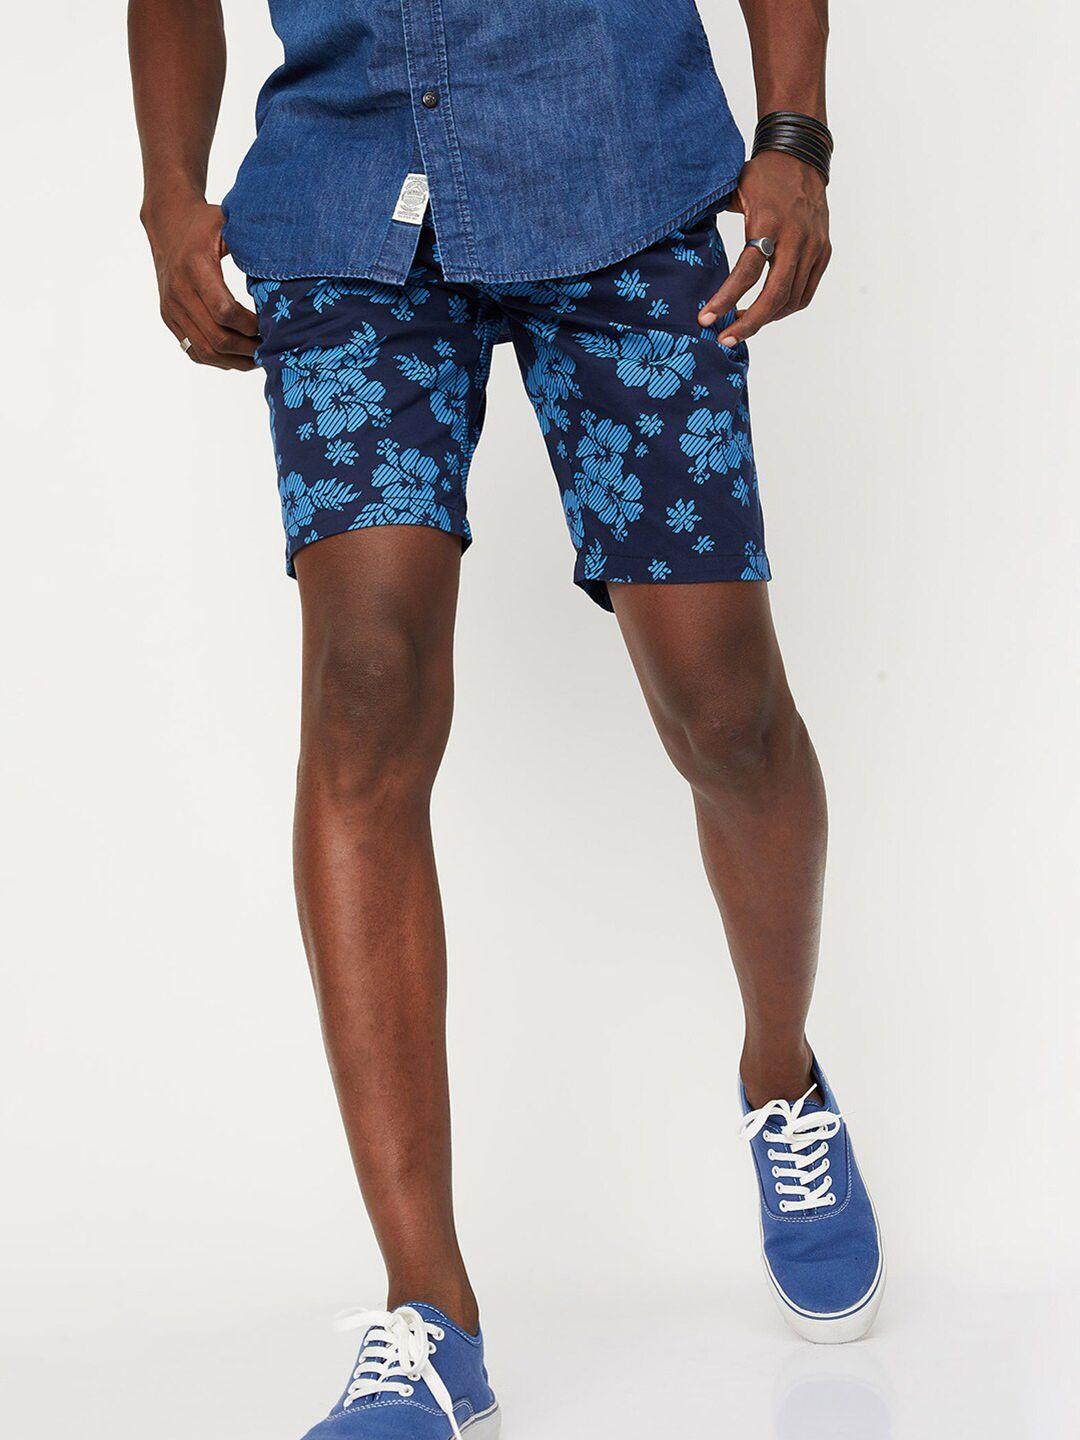 max-men-blue-floral-printed-pure-cotton-shorts